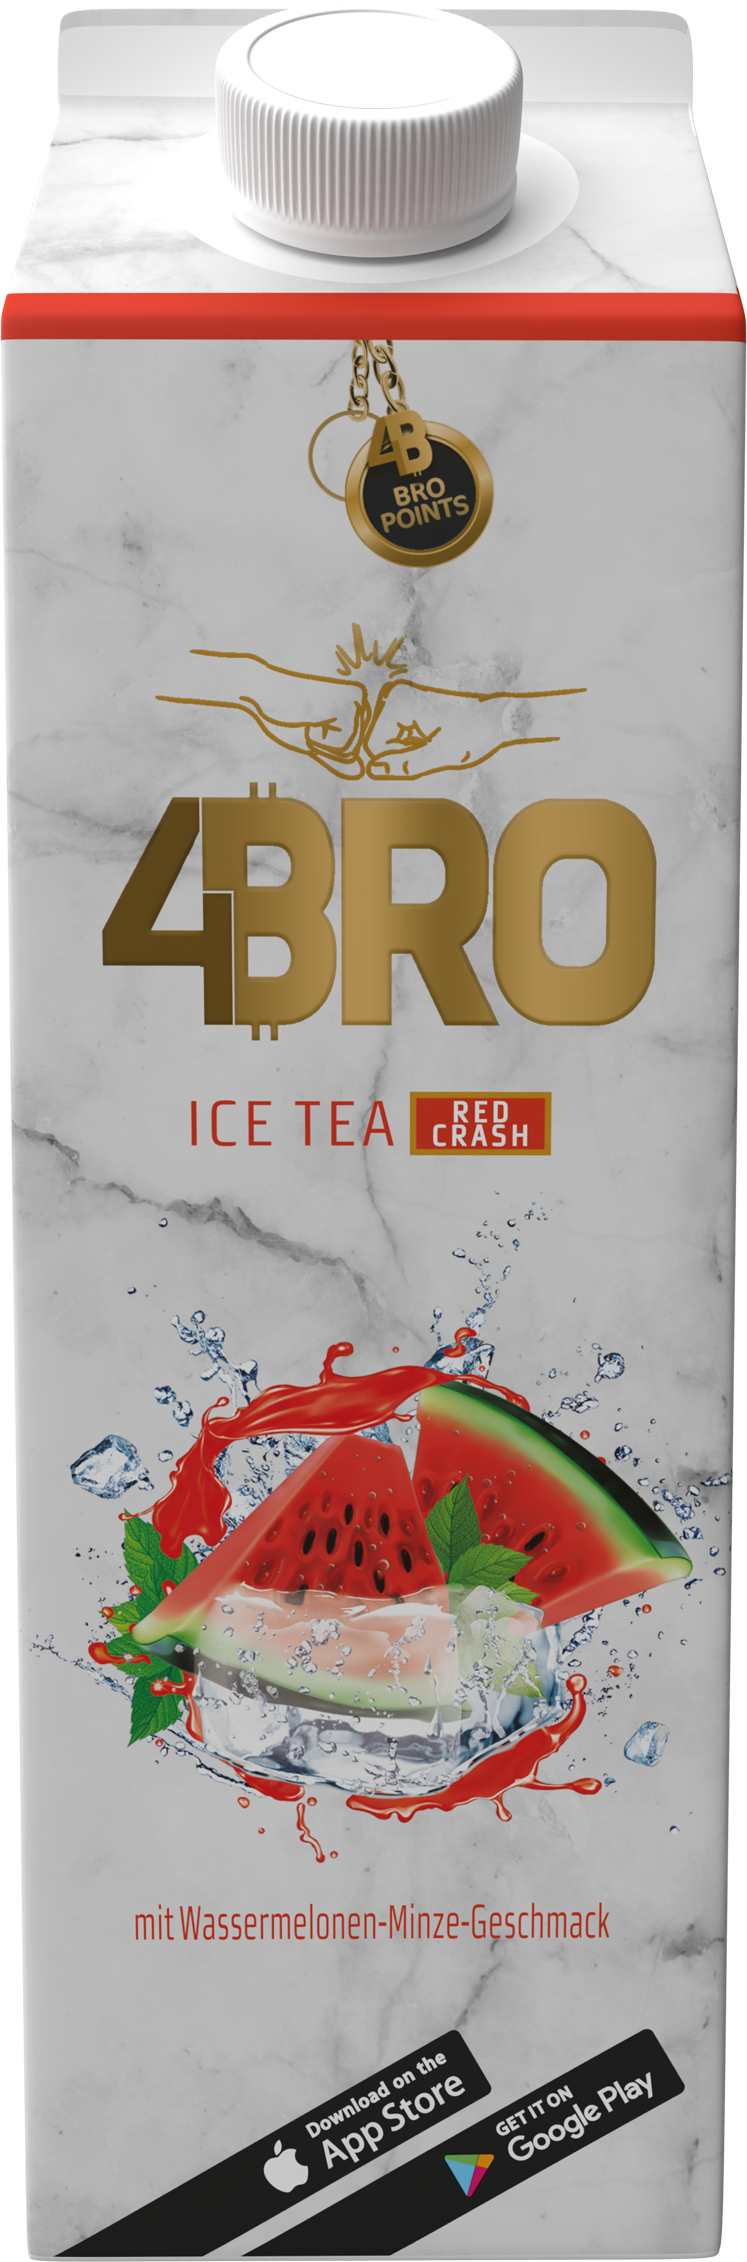 4Bro Ice Tea RED CRASH 8x1l